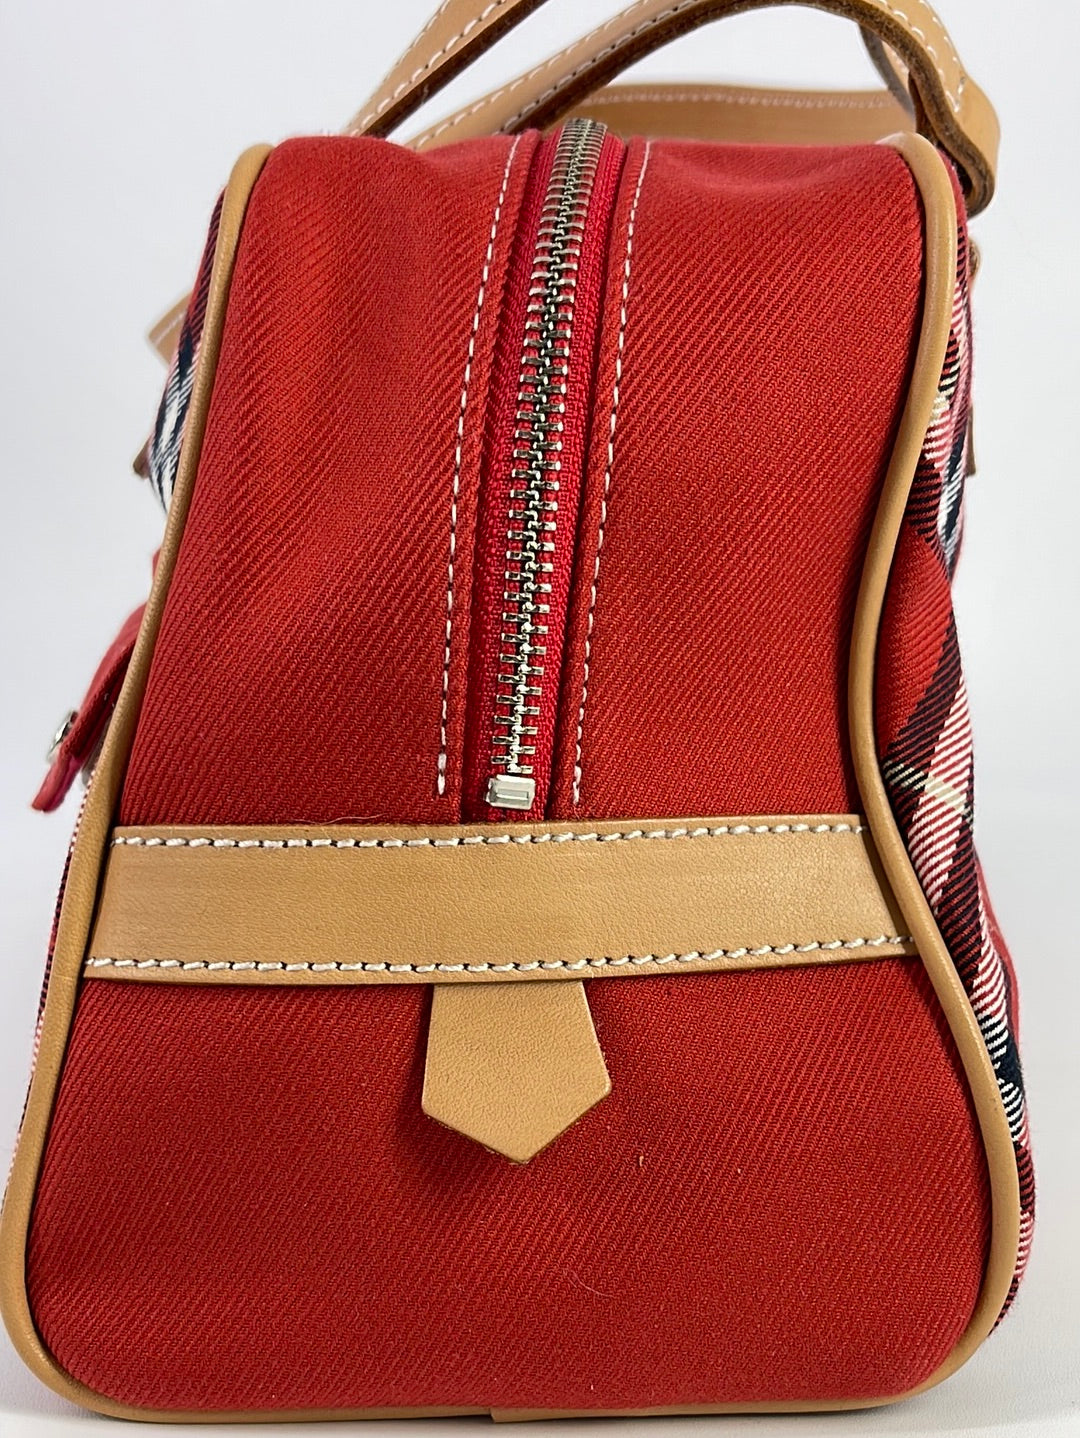 Preloved Burberry Blue Label Red Check Handbag ZA493230 051123